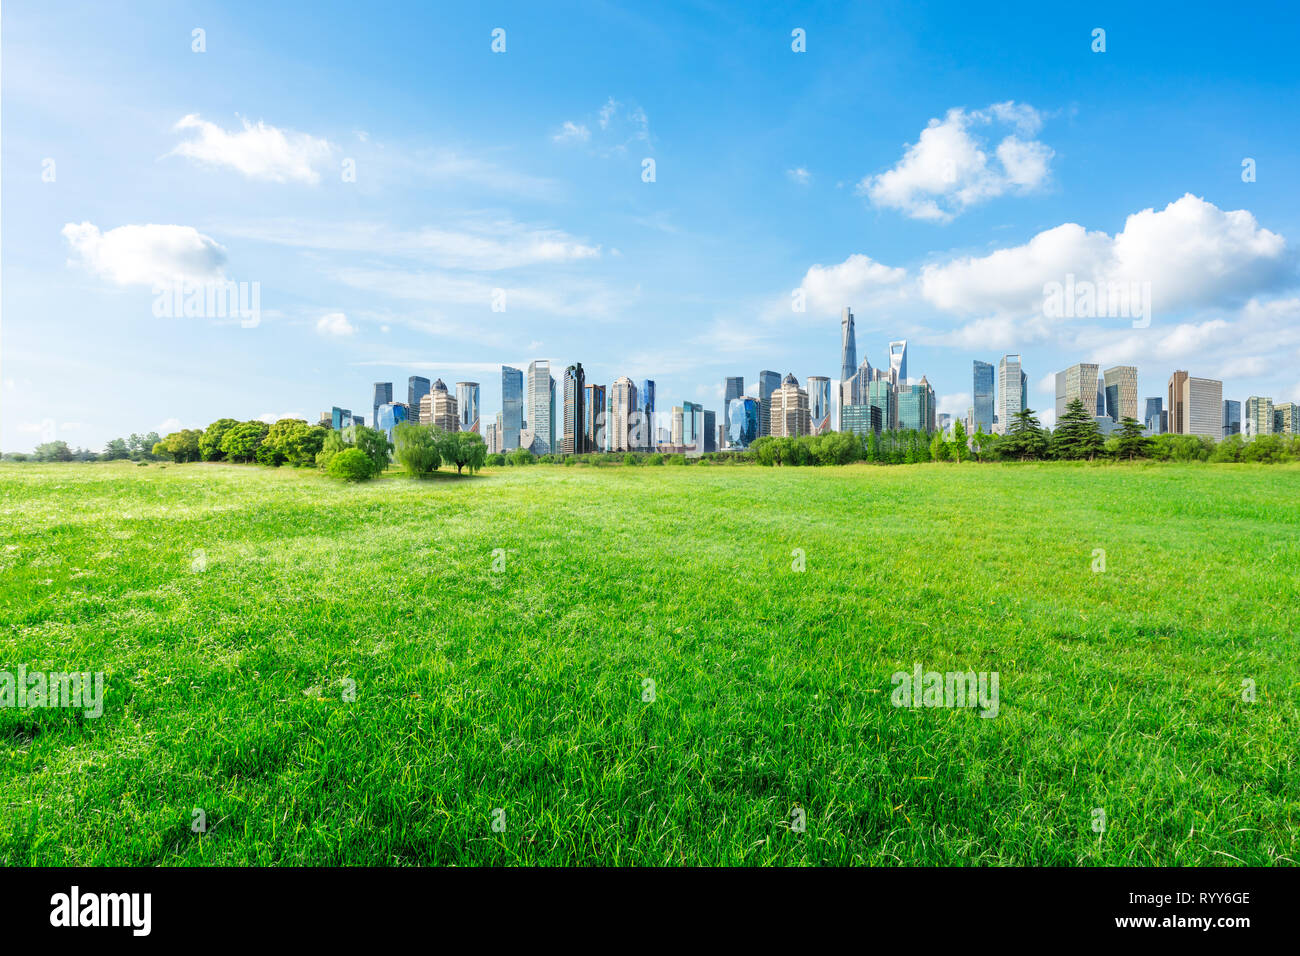 Shanghai city skyline and green grass under the blue sky,China Stock Photo